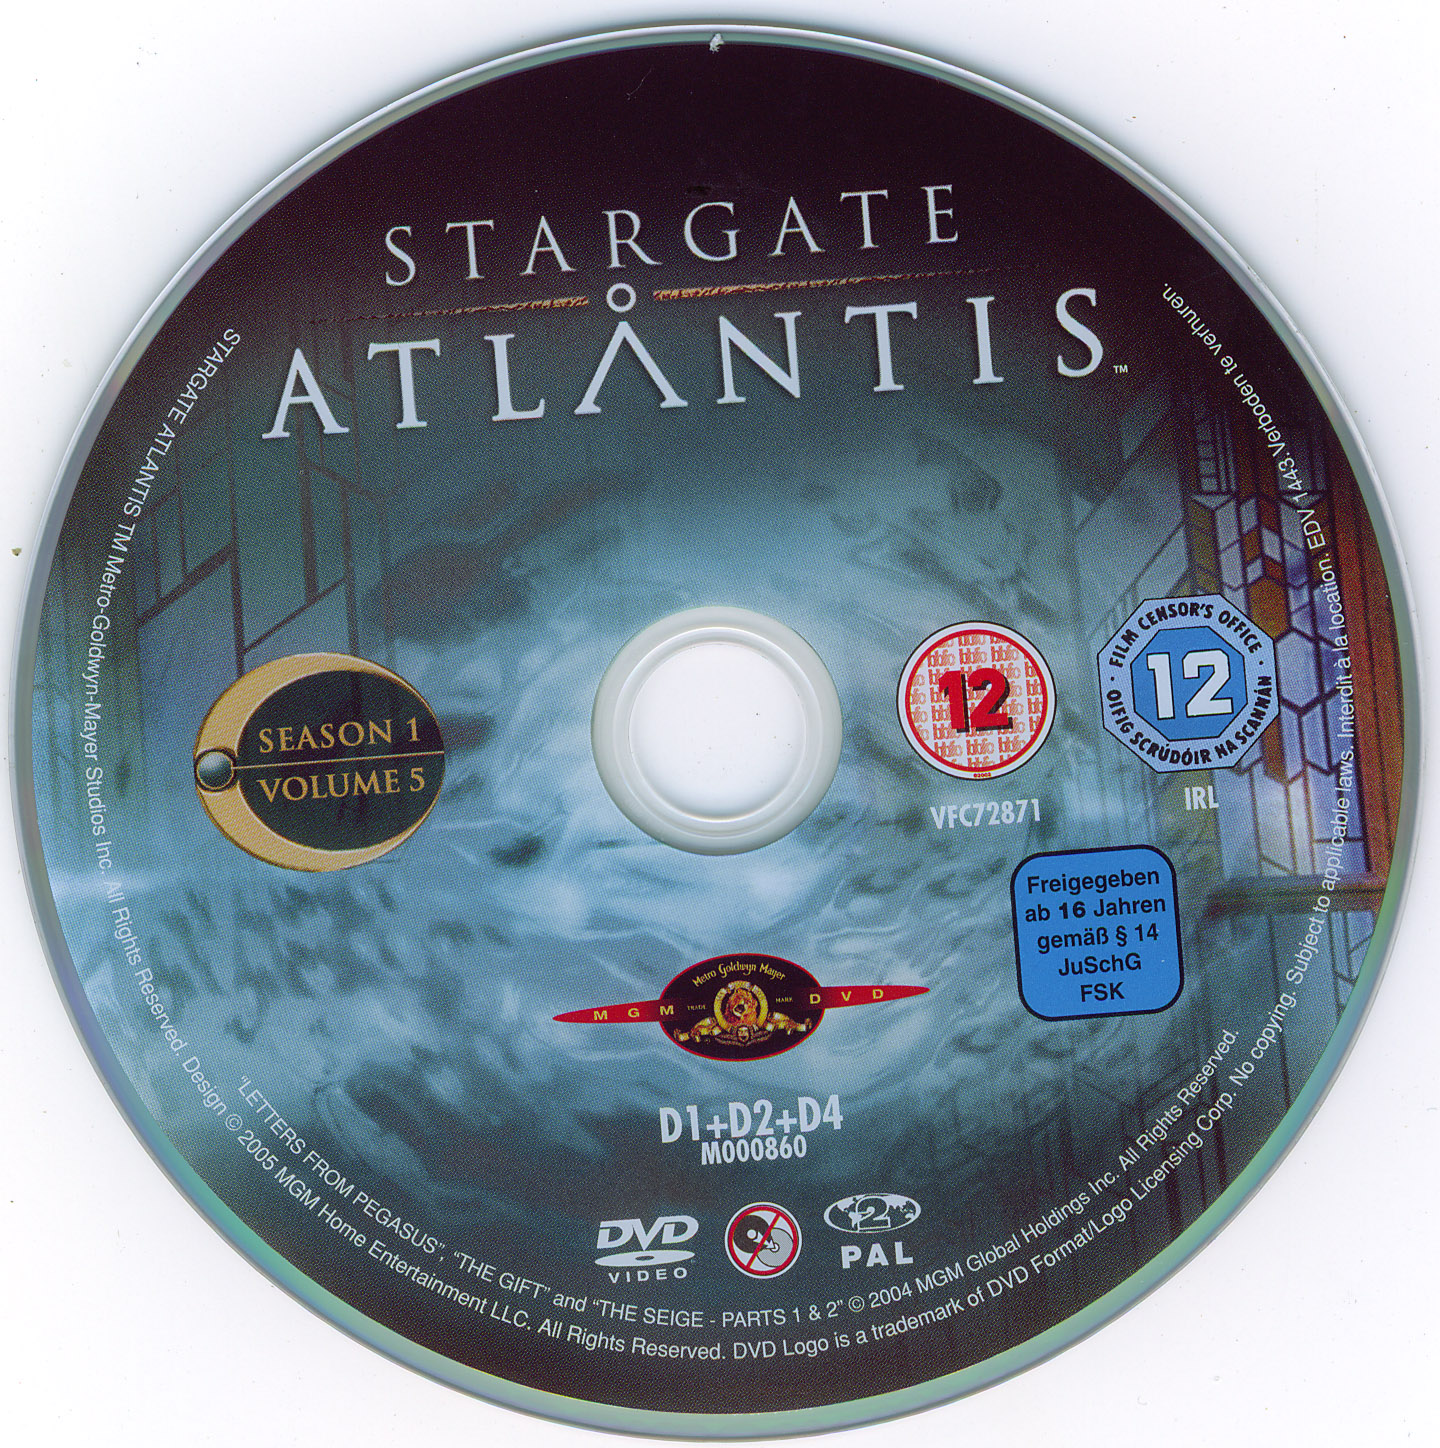 Stargate Atlantis saison 1 vol 5